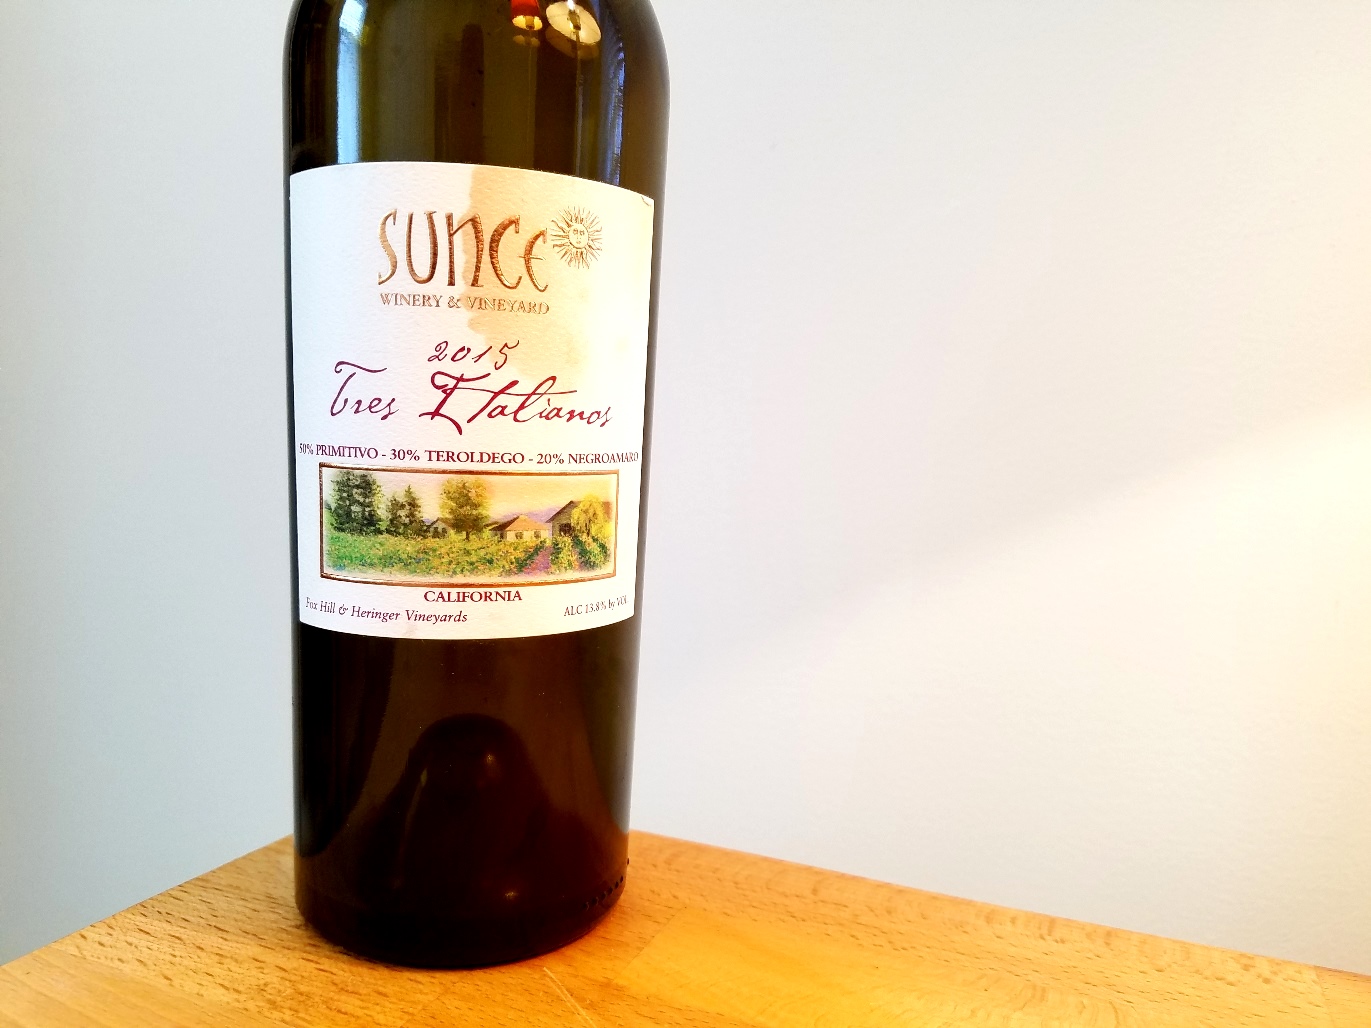 Sunce Winery & Vineyard, Tres Italianos 2015, Fox Hill & Heringer Vineyards, California, Wine Casual